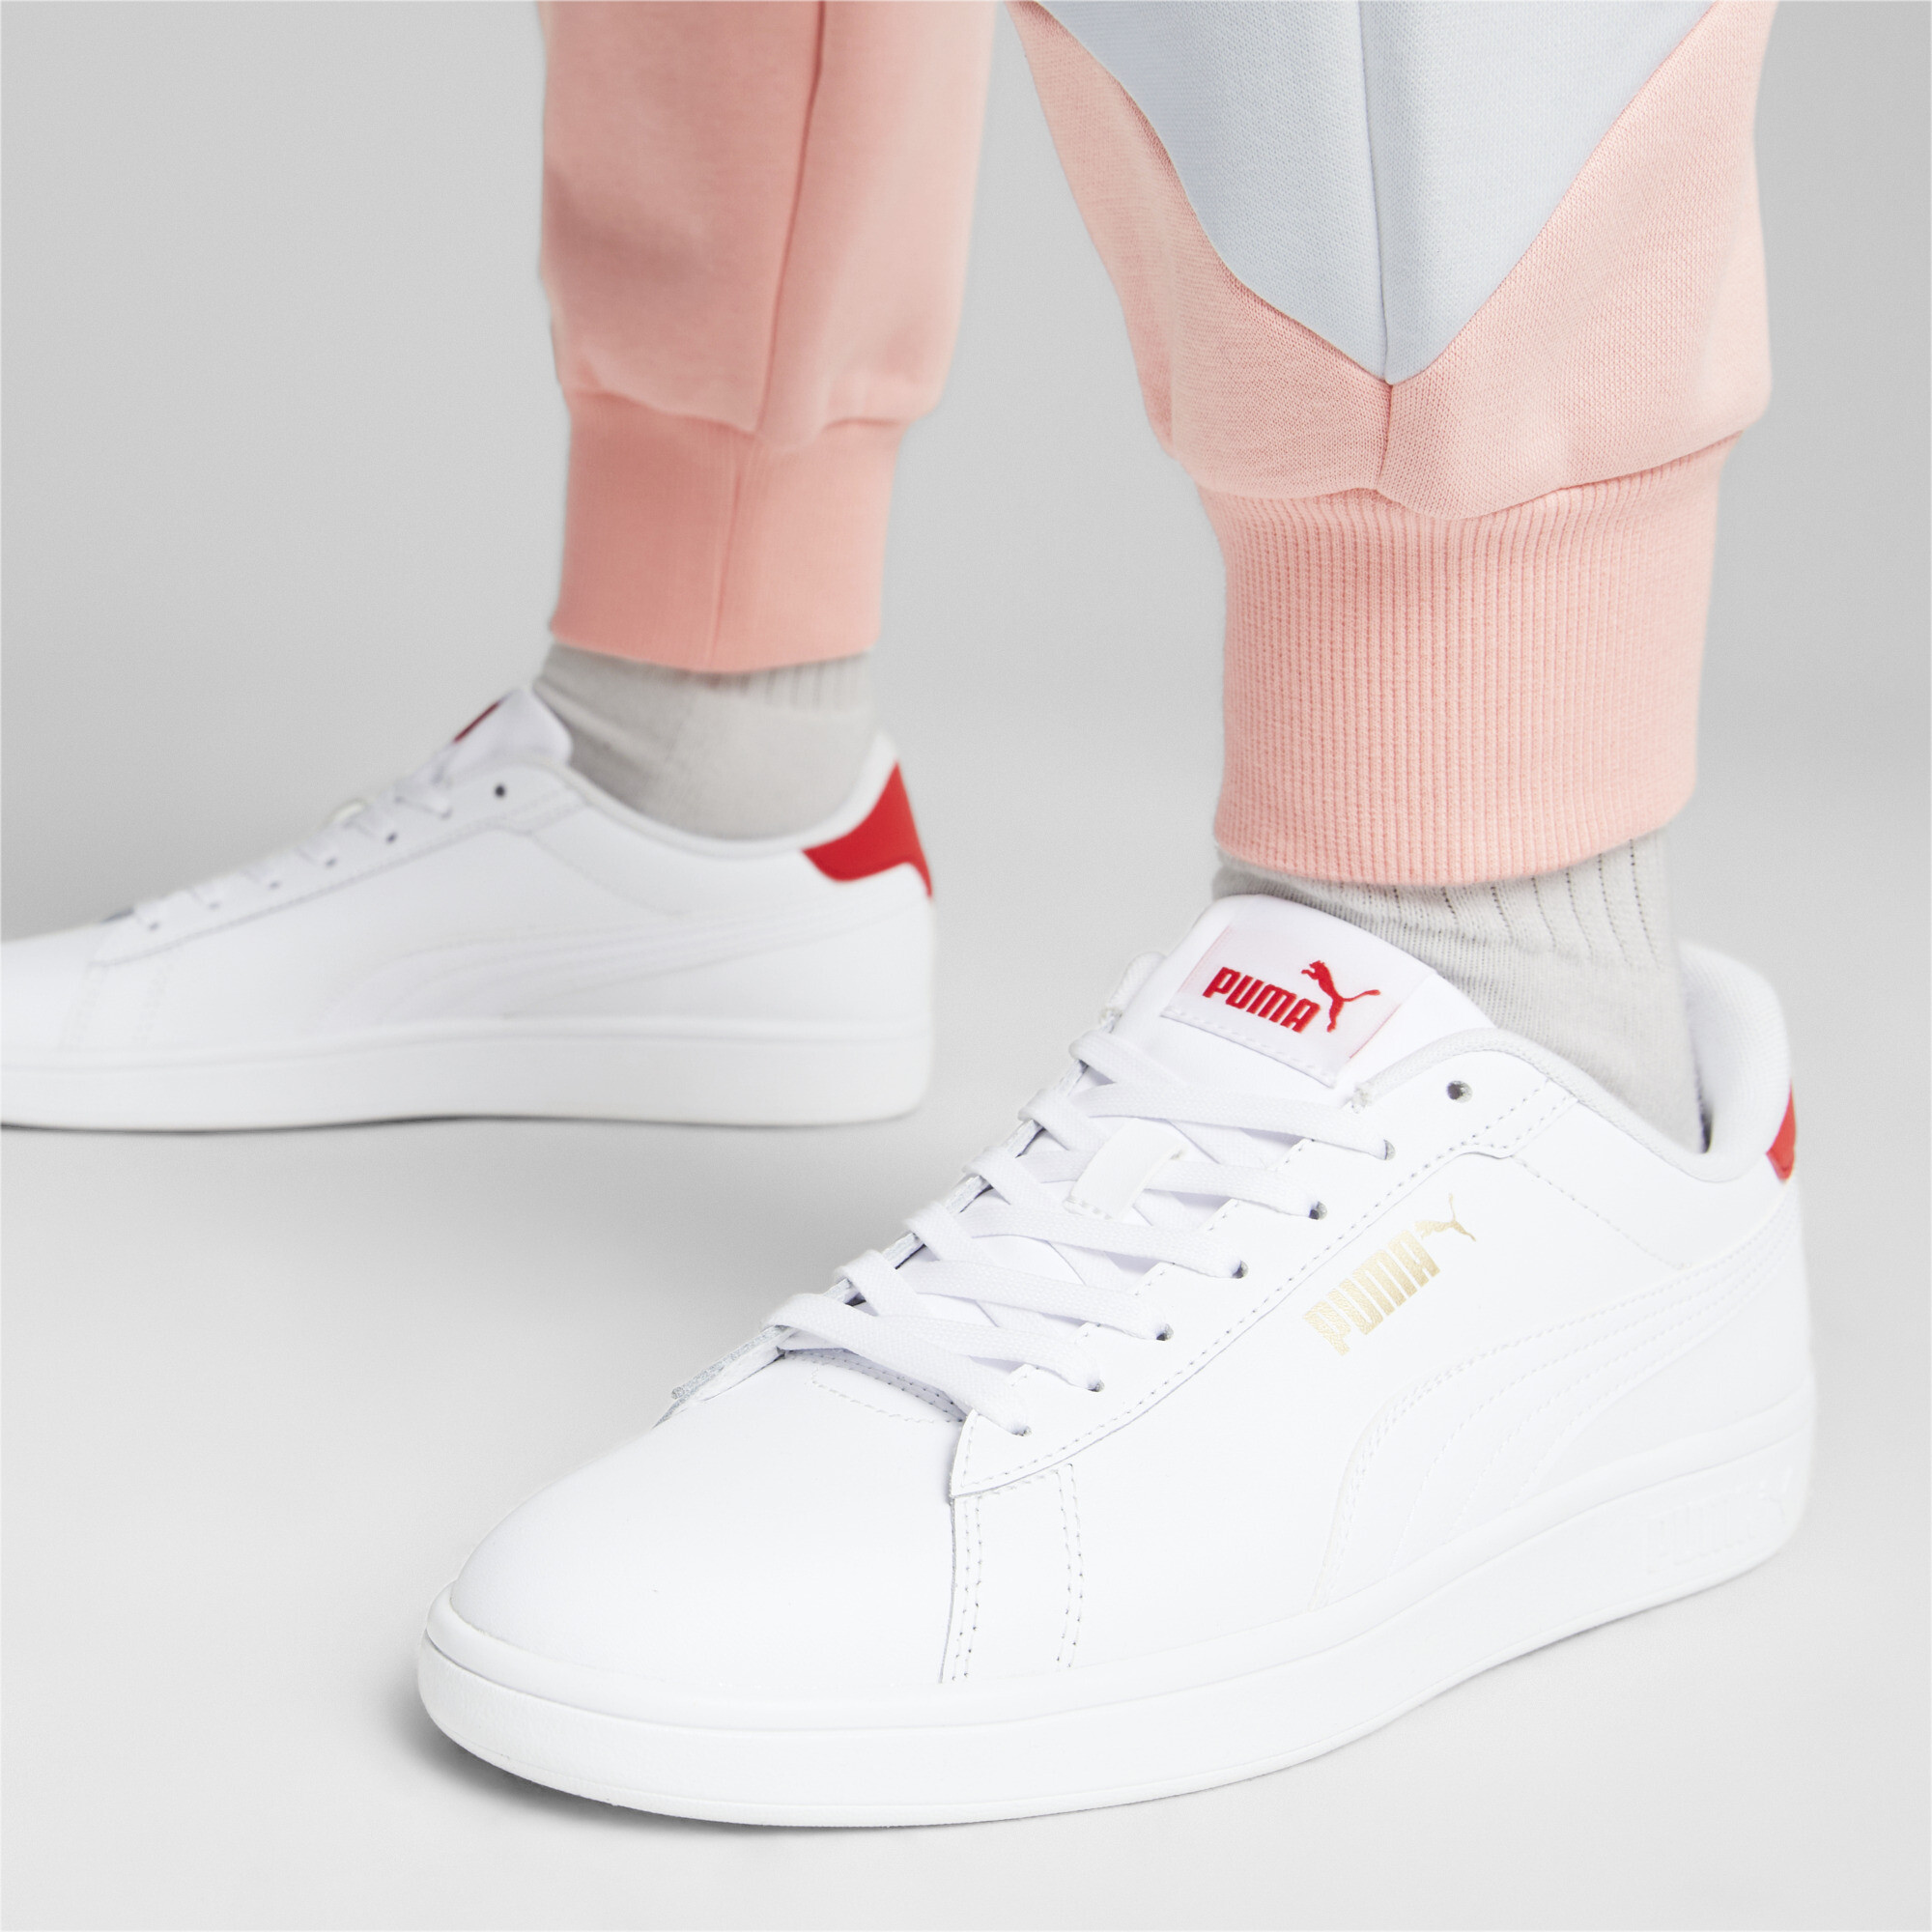 Puma Smash 3.0 L Sneakers, White, Size 40.5, Shoes